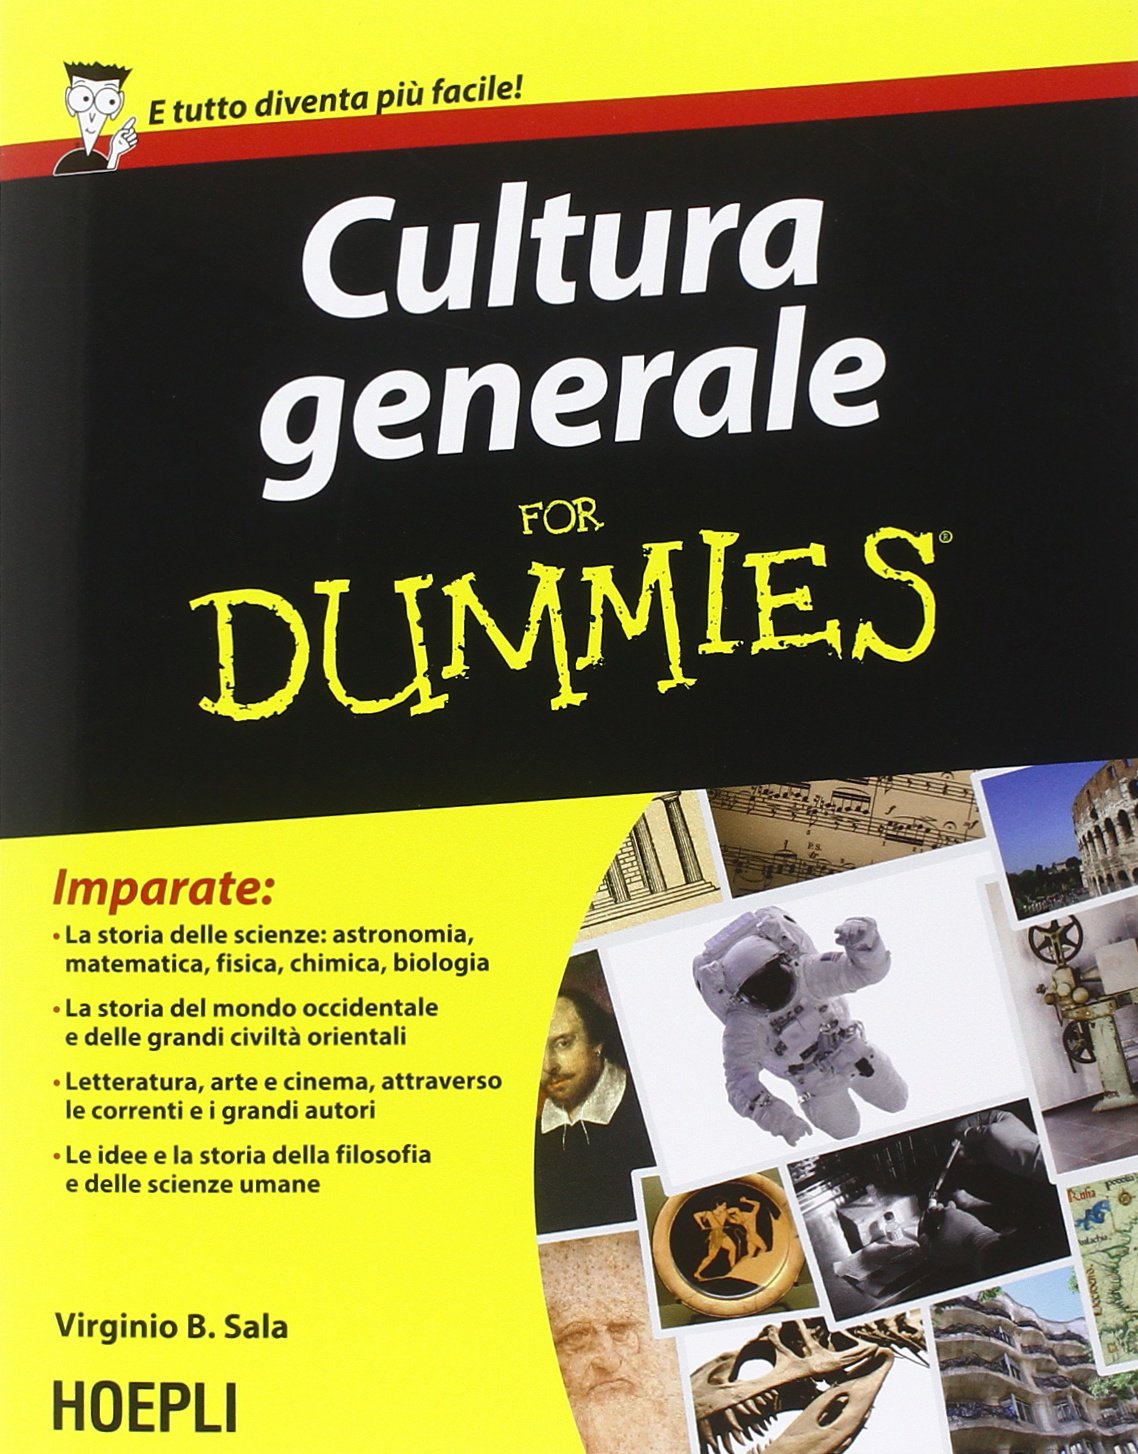 Cultura generale For Dummies